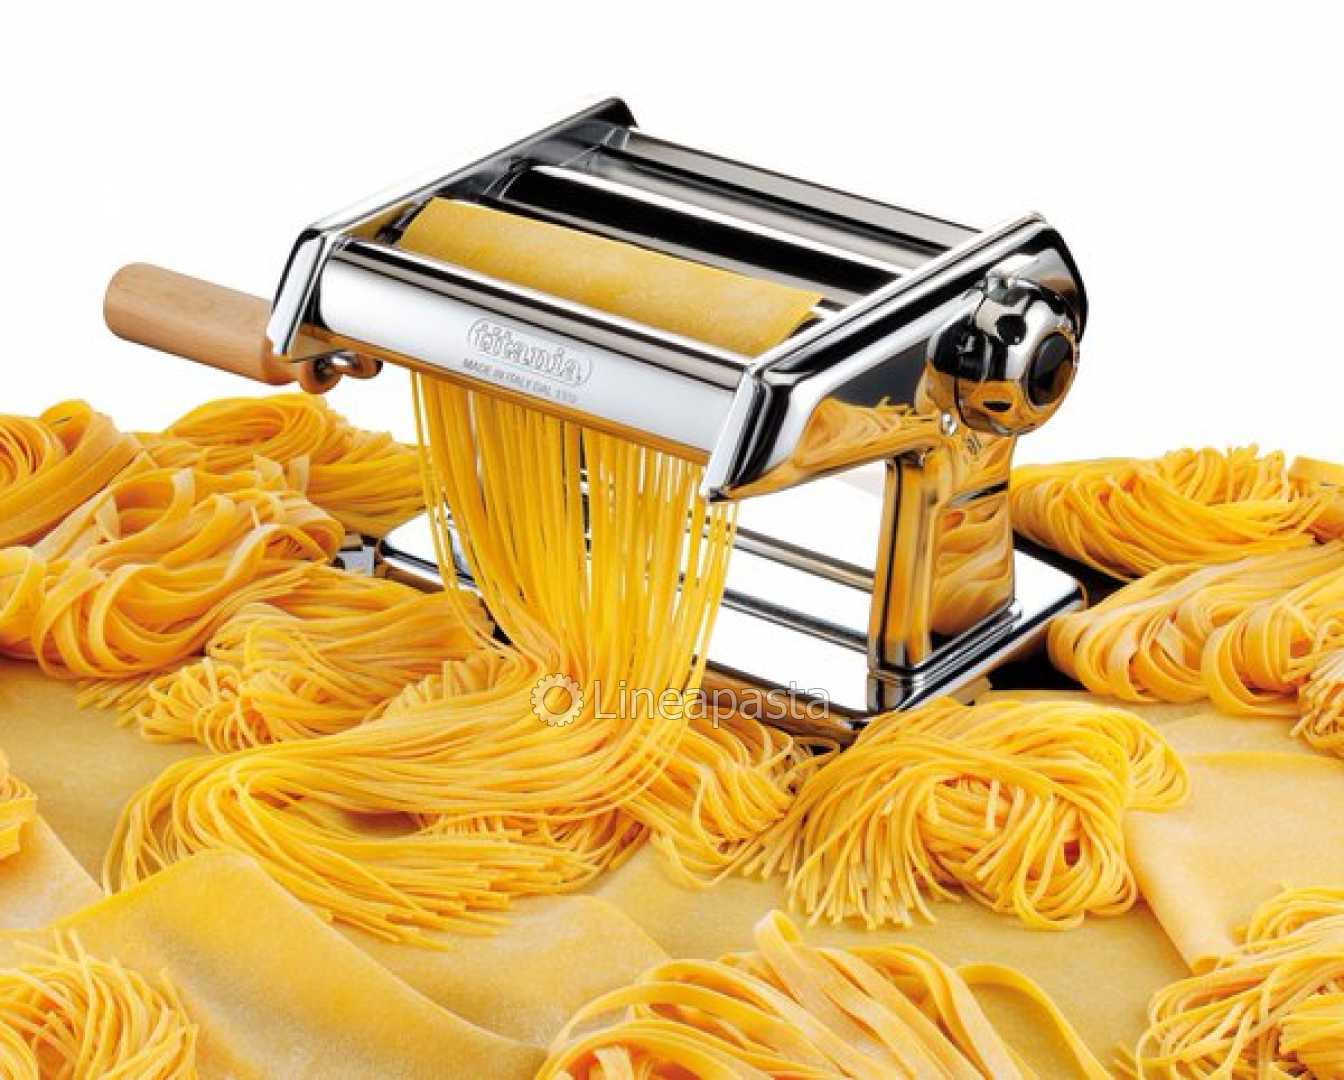 Stuff We Love: Pasta Made With an Imperia Pasta Machine